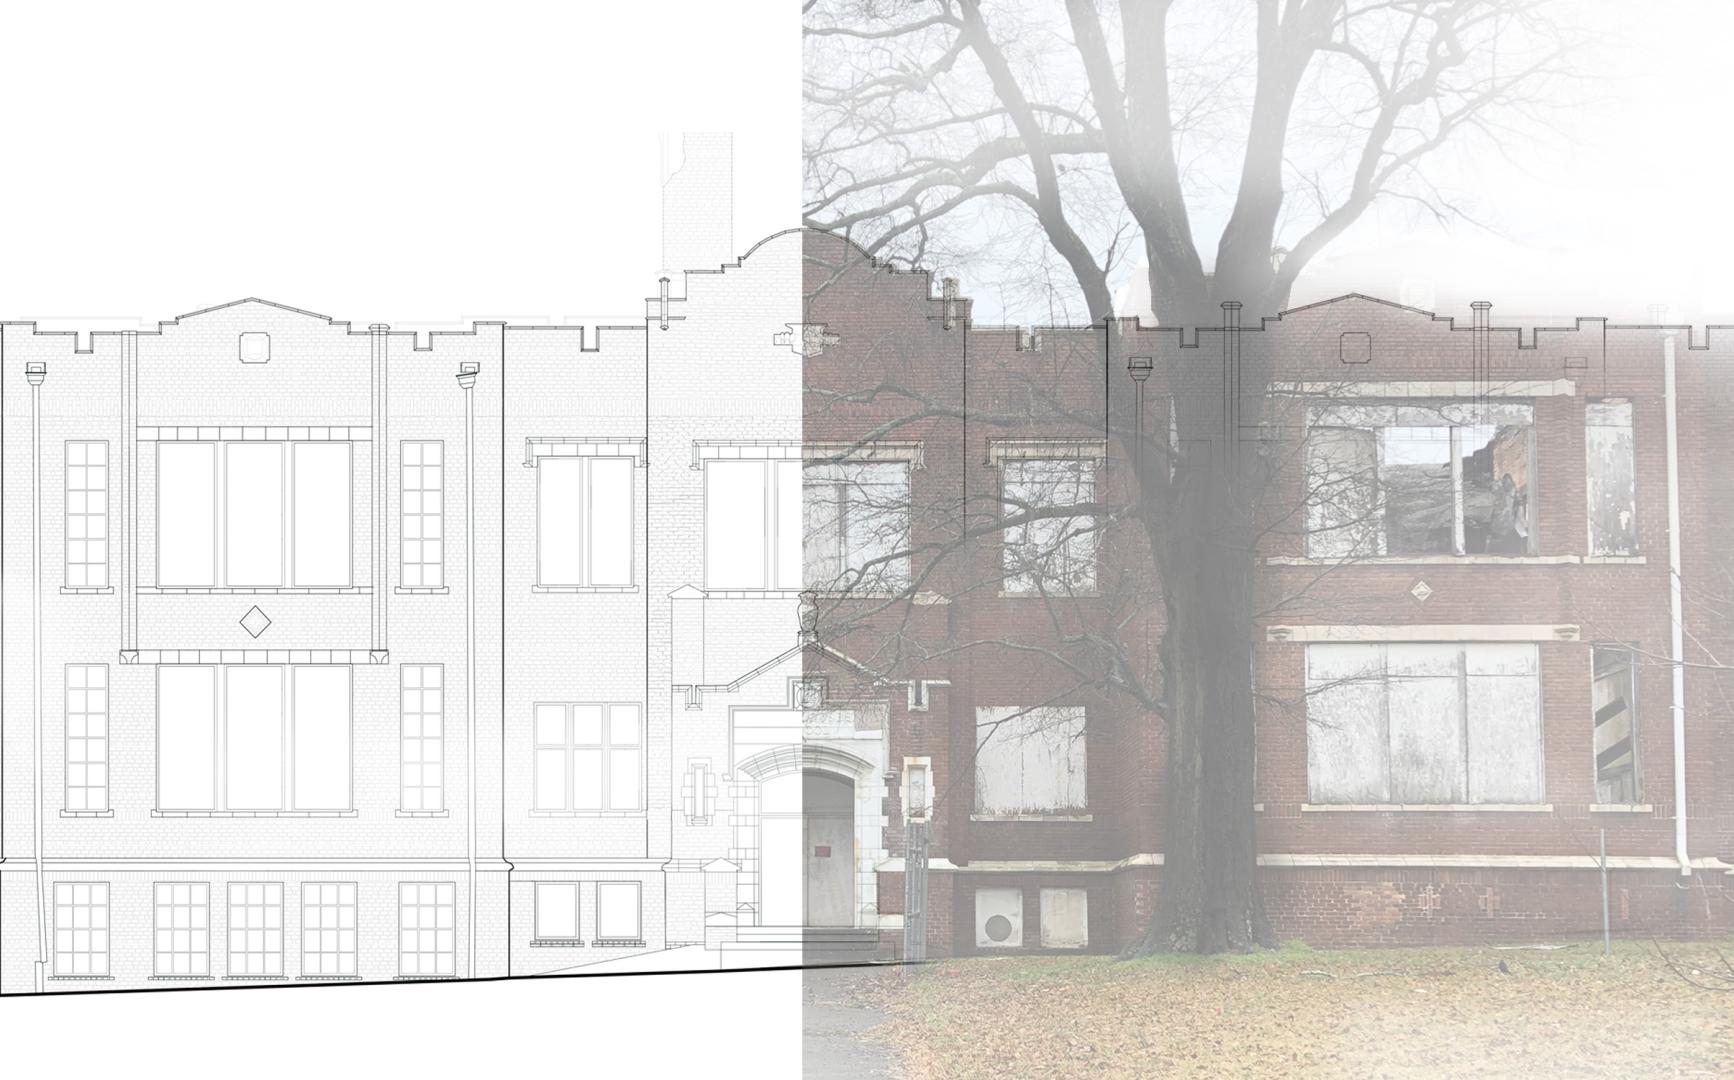 Hybrid drawing/photograph design of an English Avenue elementary school.